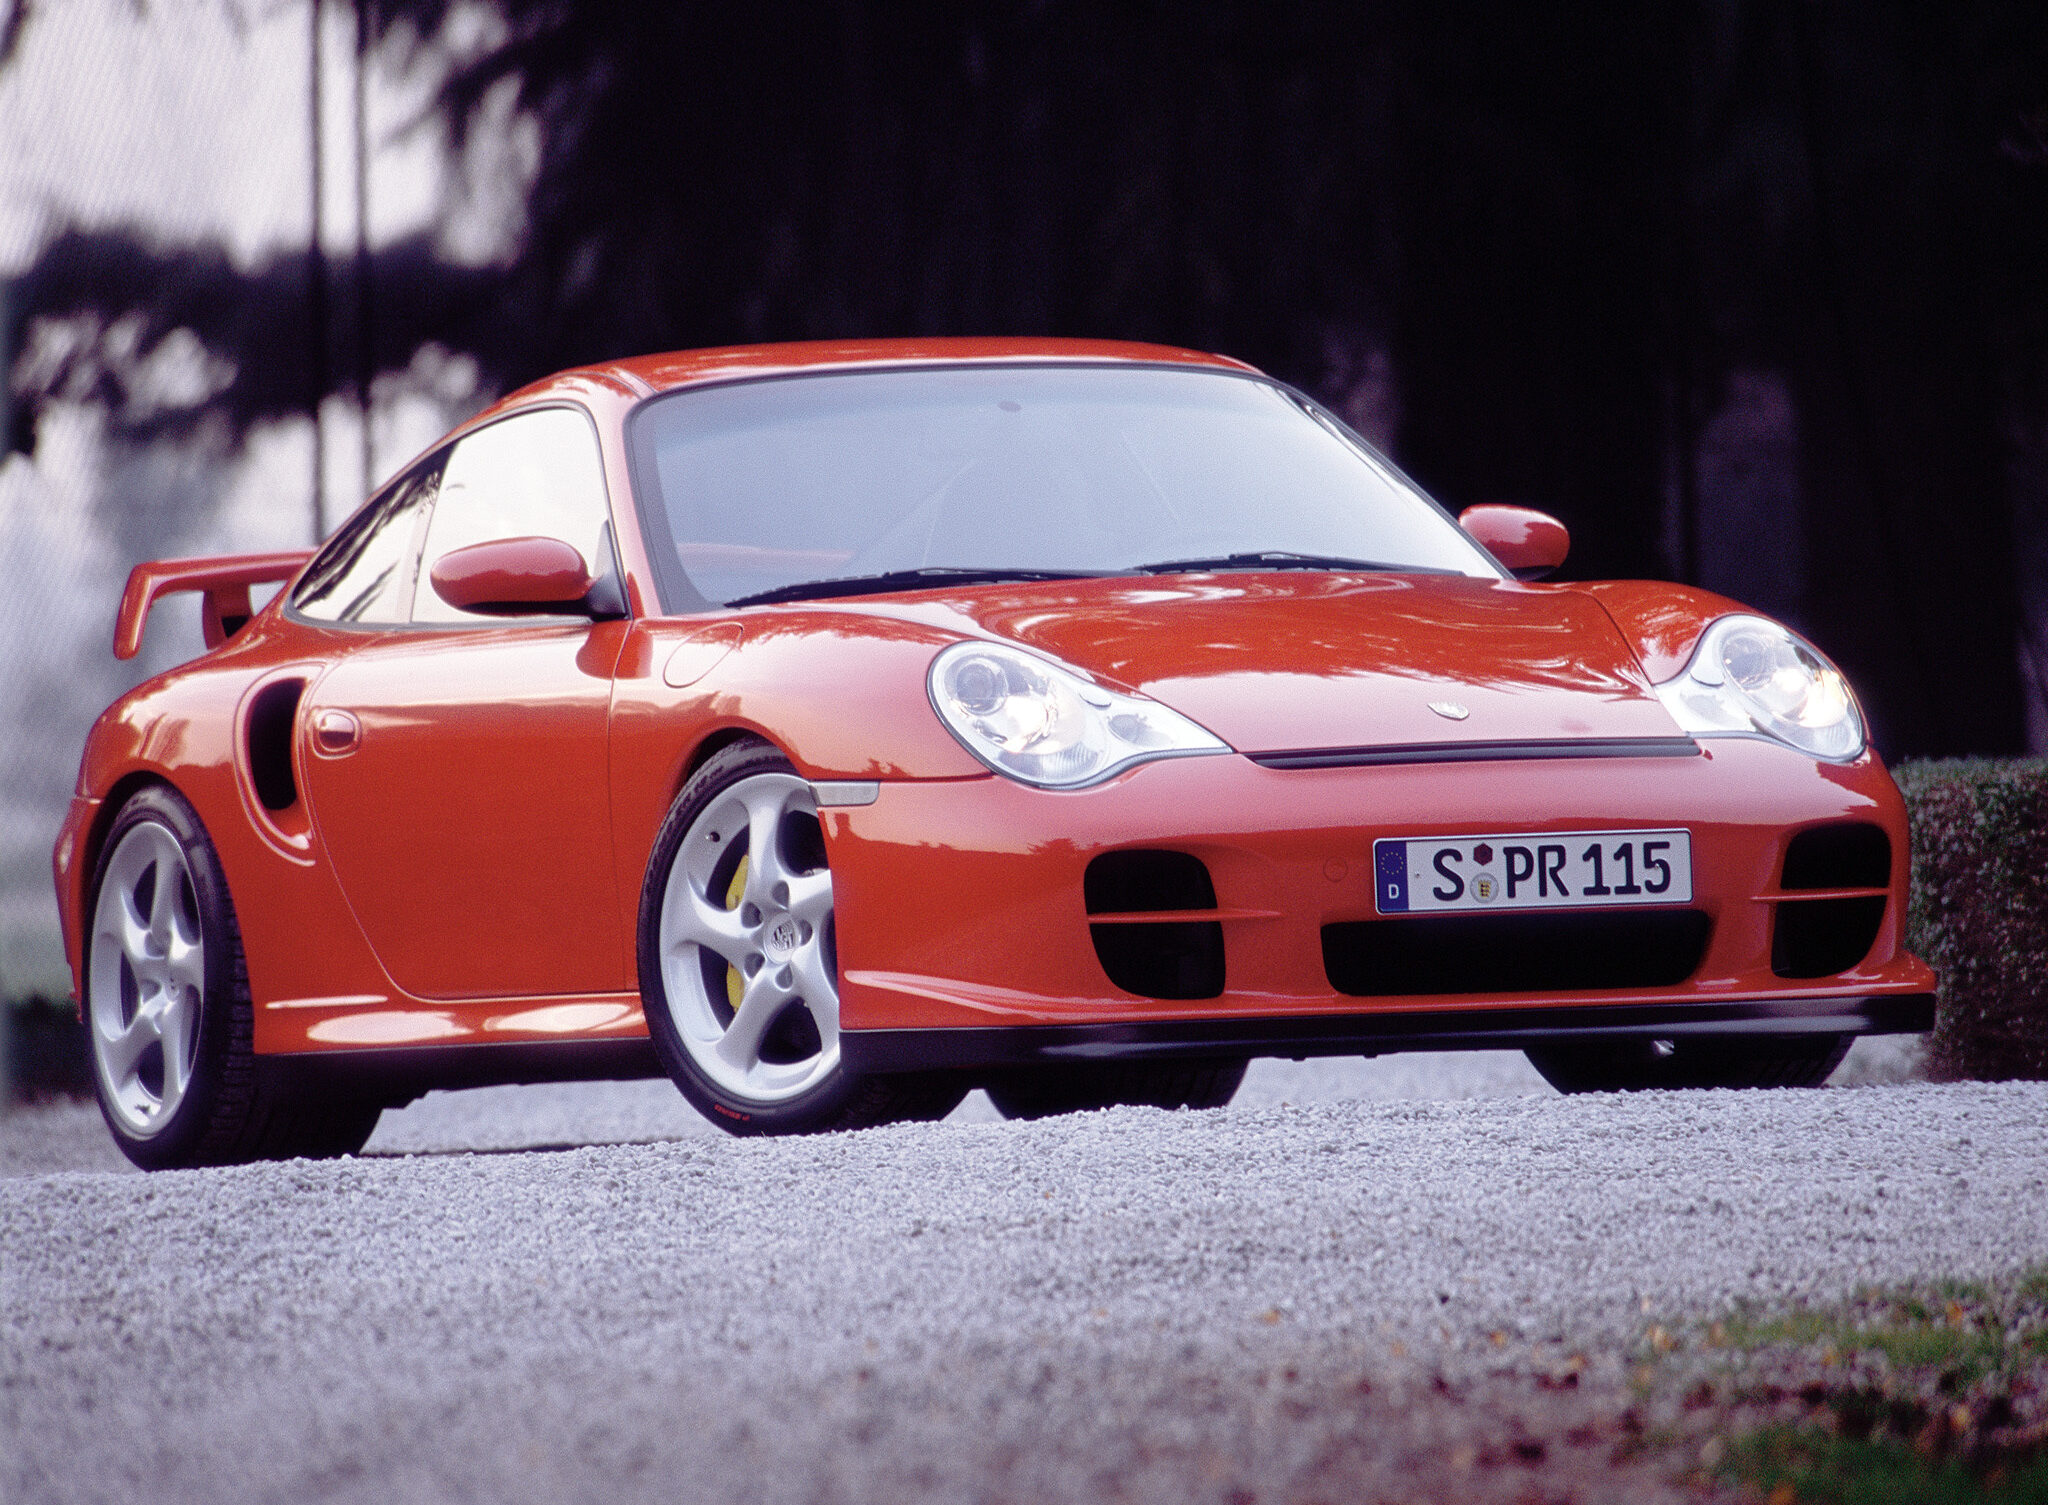 Porsche Of The Day: 2001 Porsche 911 GT2